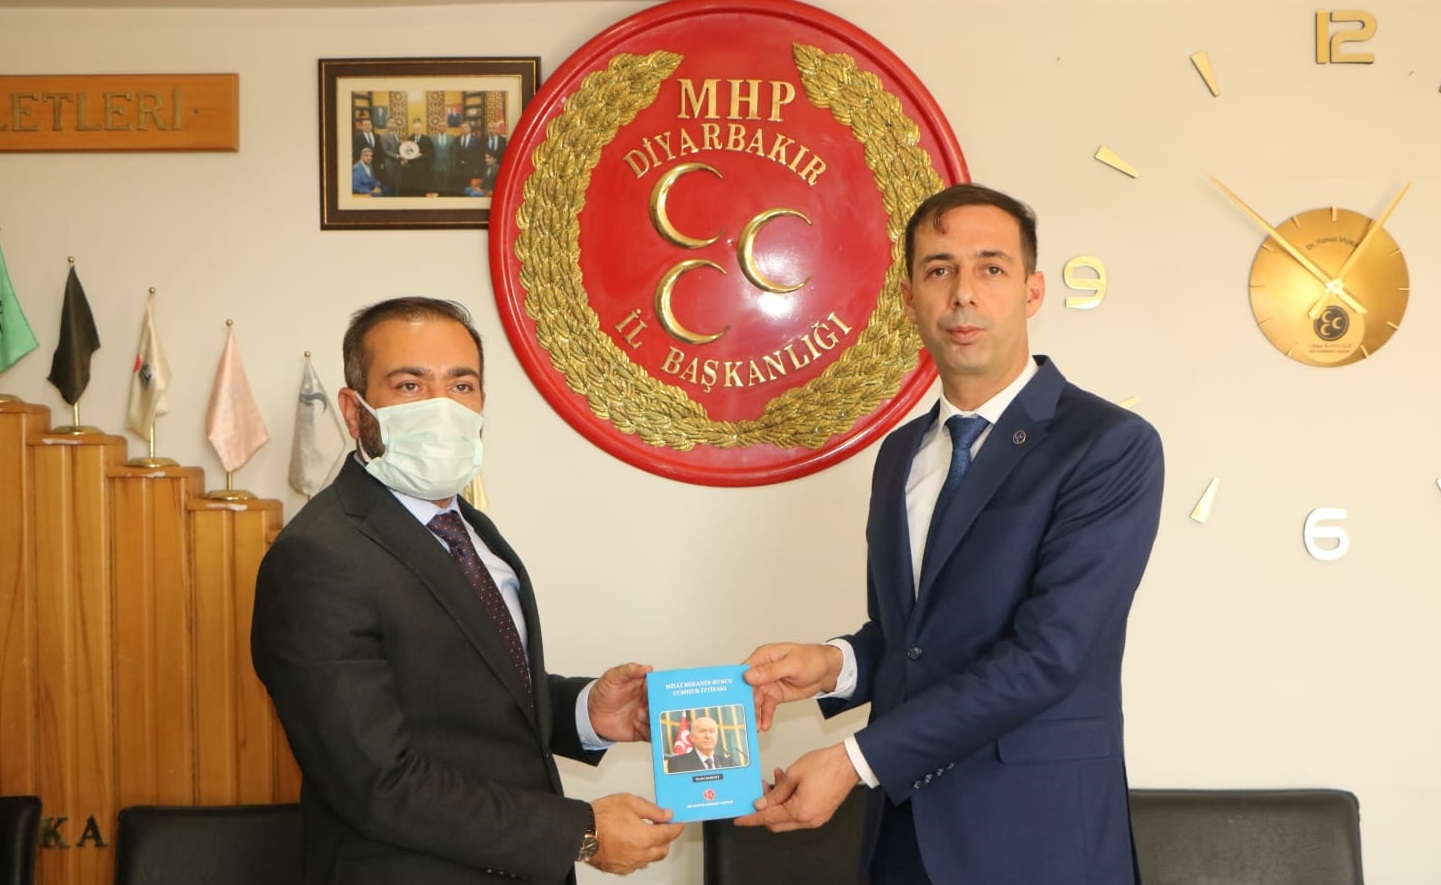 MHP Diyarbakır İl Başkanı, Cinsel İstismardan Tutuklandı